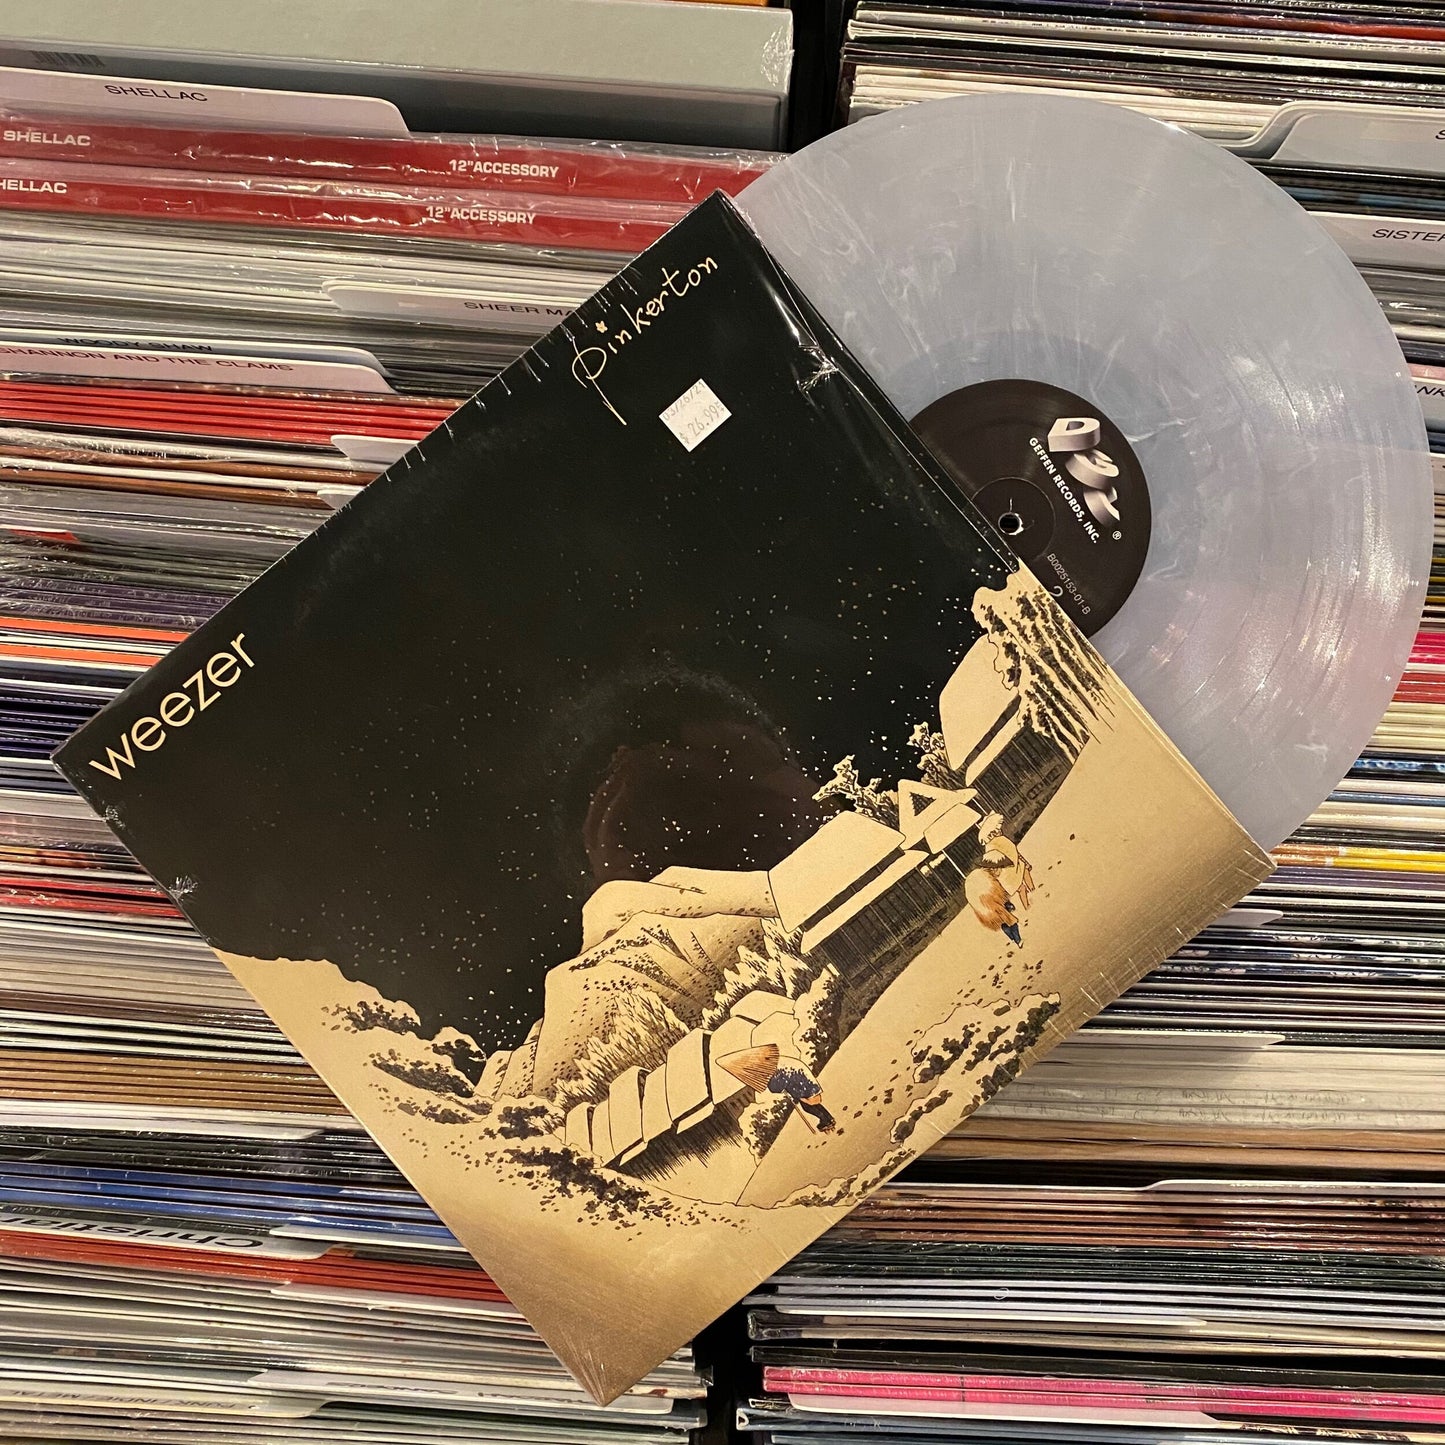 Weezer "Pinkerton" LP (Snowy White/Grey vinyl)